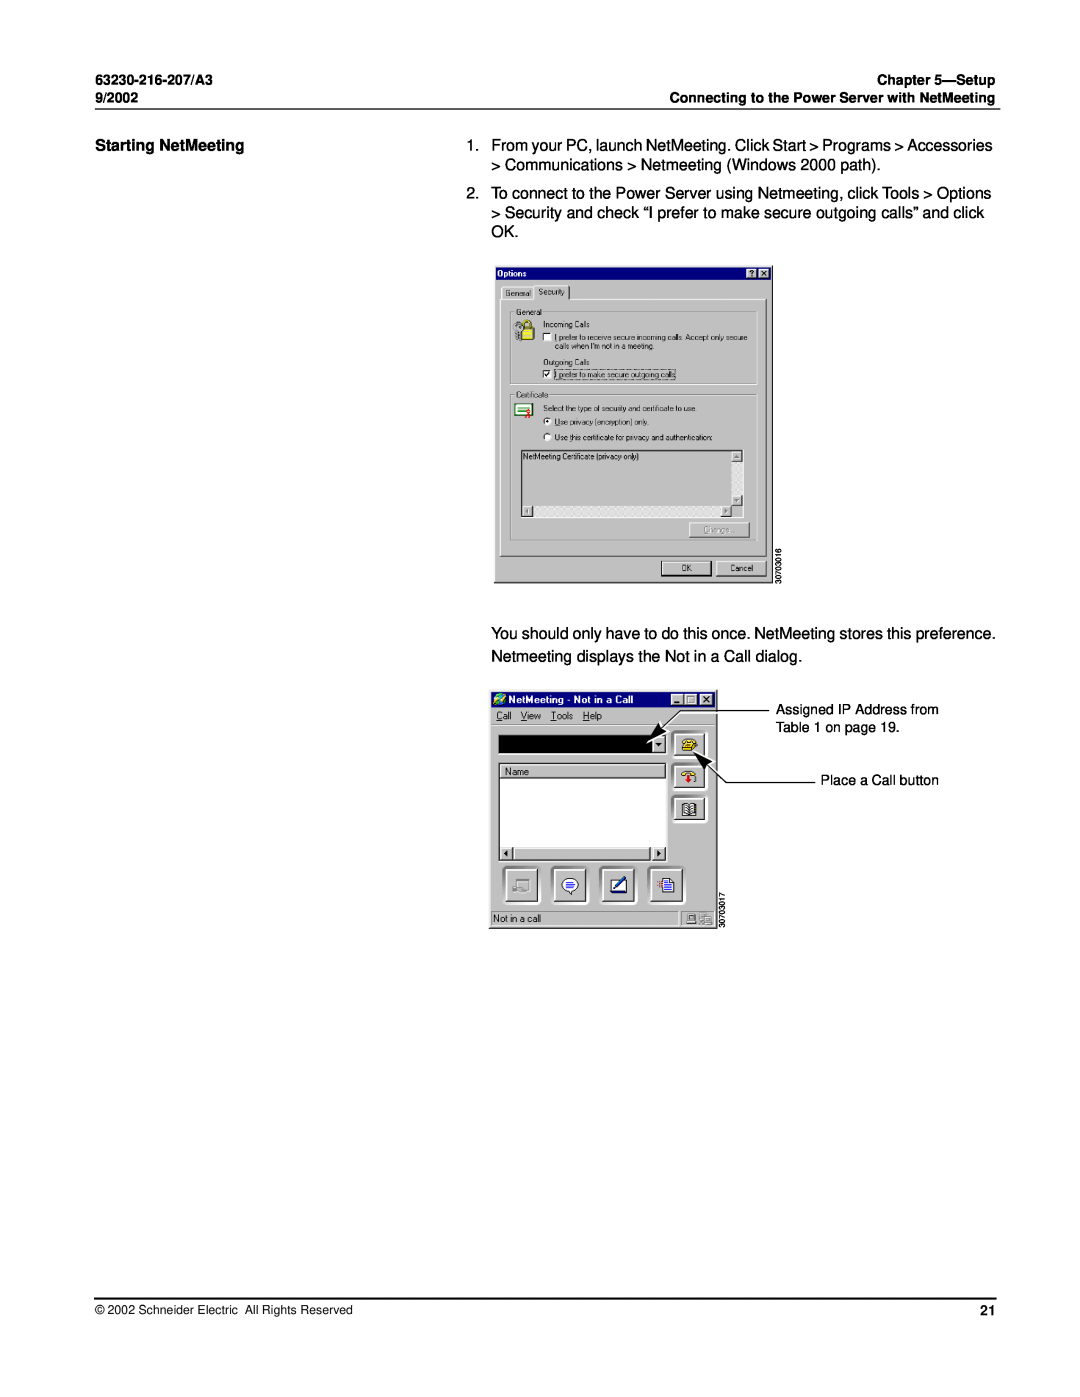 Schneider Electric PWRSRV750 Starting NetMeeting, Communications Netmeeting Windows 2000 path, 63230-216-207/A3, Setup 